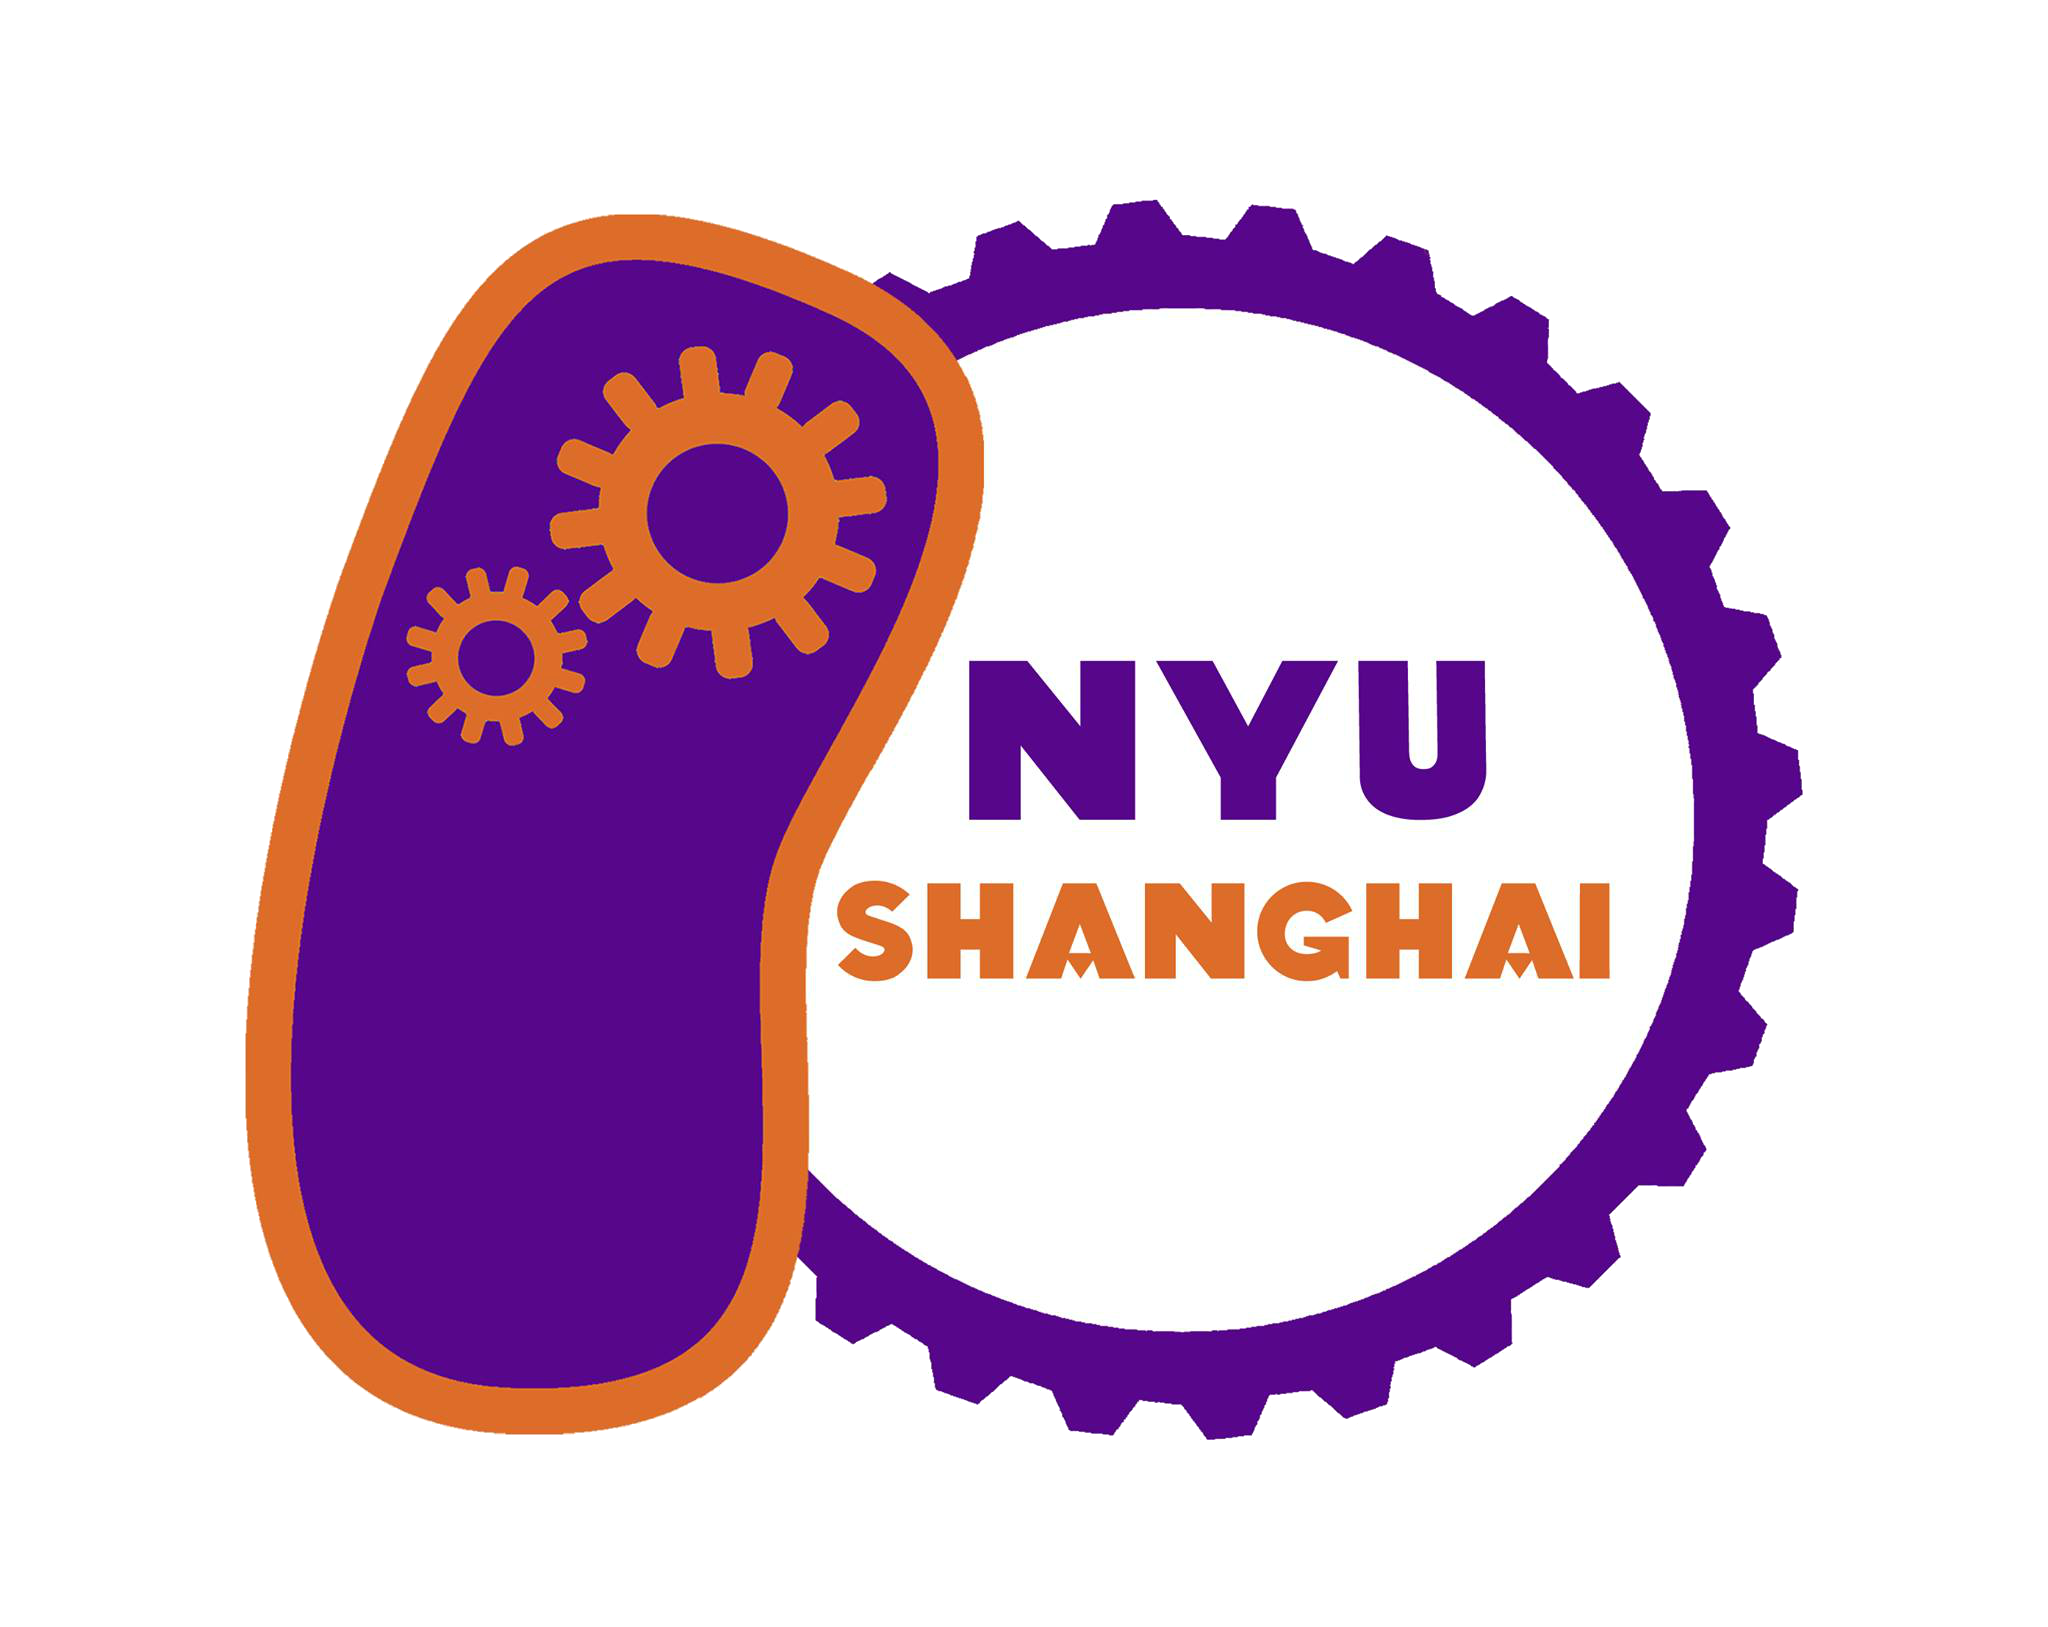 NYU Shanghai logo.png